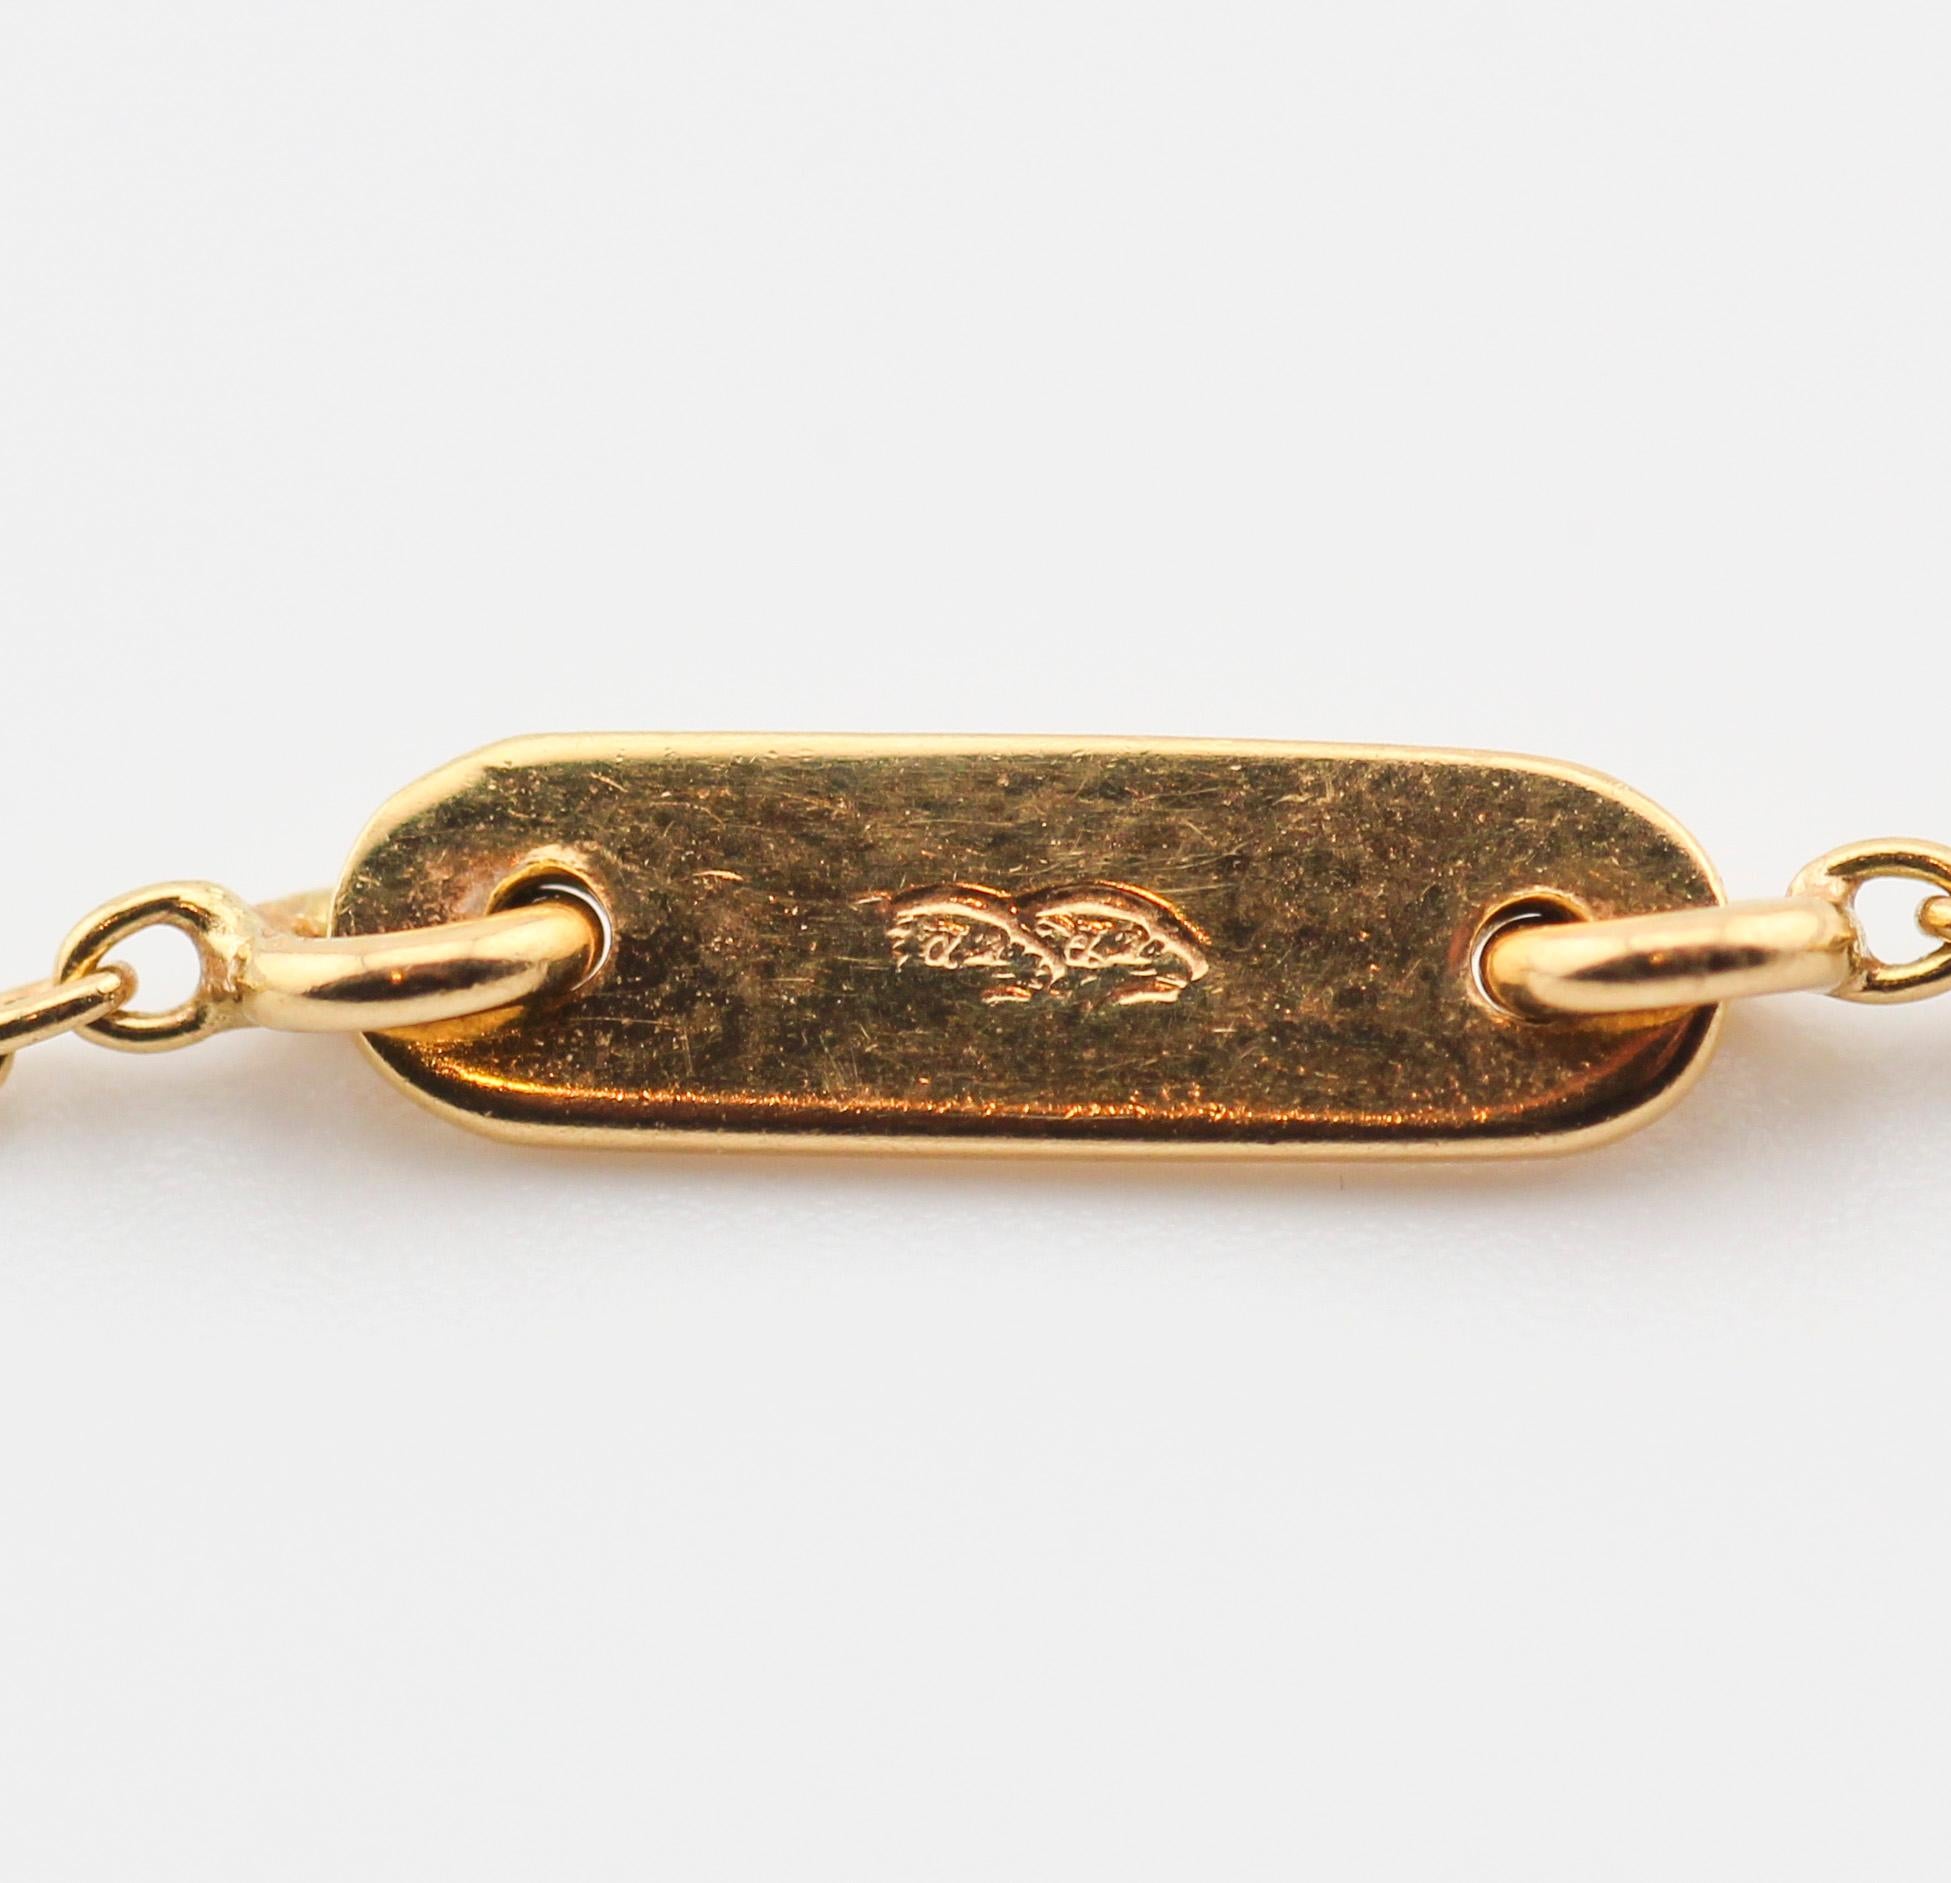 Brilliant Cut Van Cleef & Arpels Diamond 18K Yellow Gold Cross Pendant Necklace For Sale